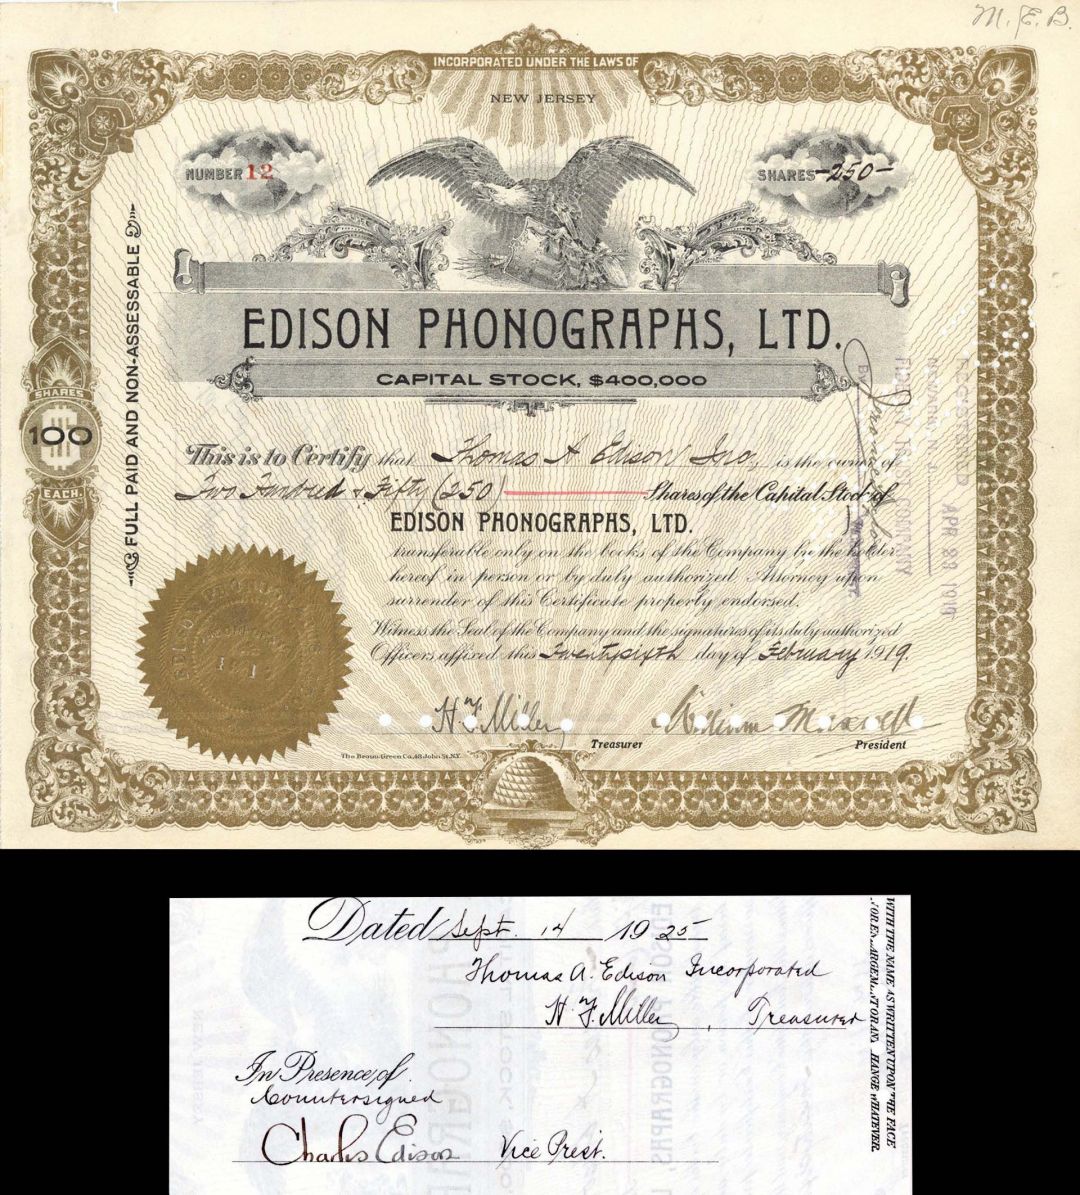 Edison Phonographs, Ltd. Signed by Charles Edison - Stock Certificate